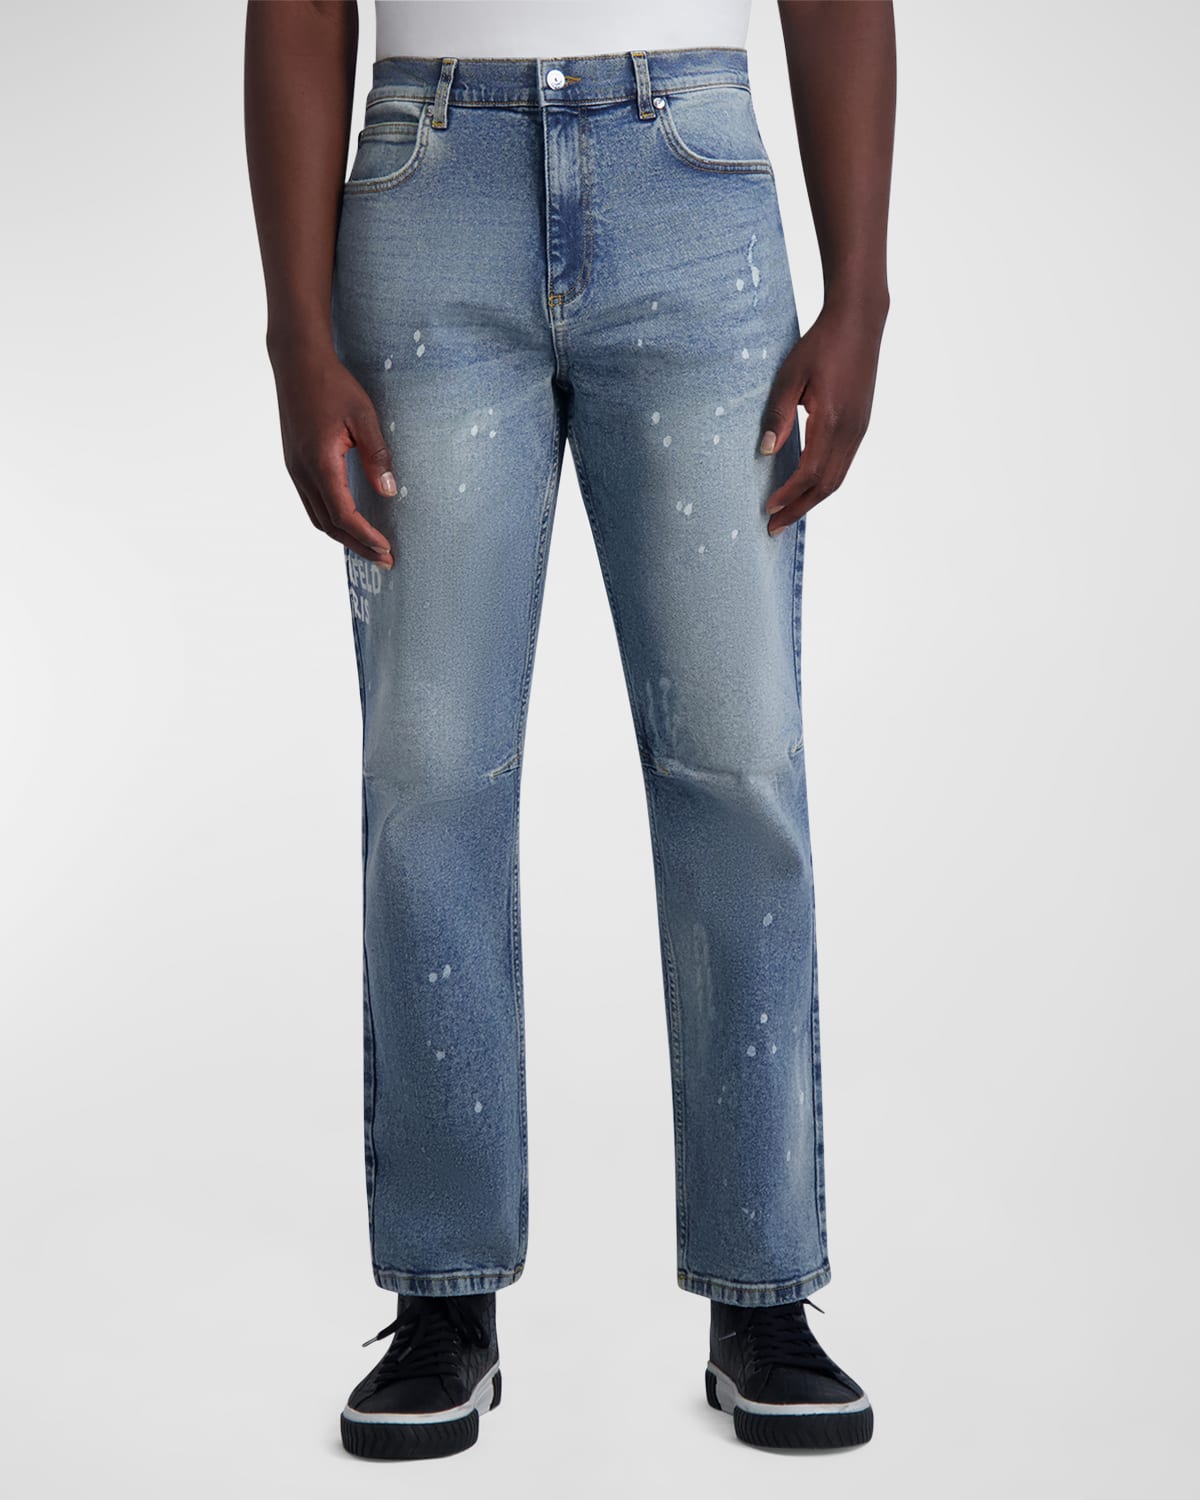 Men's Paint-Splatter Jeans